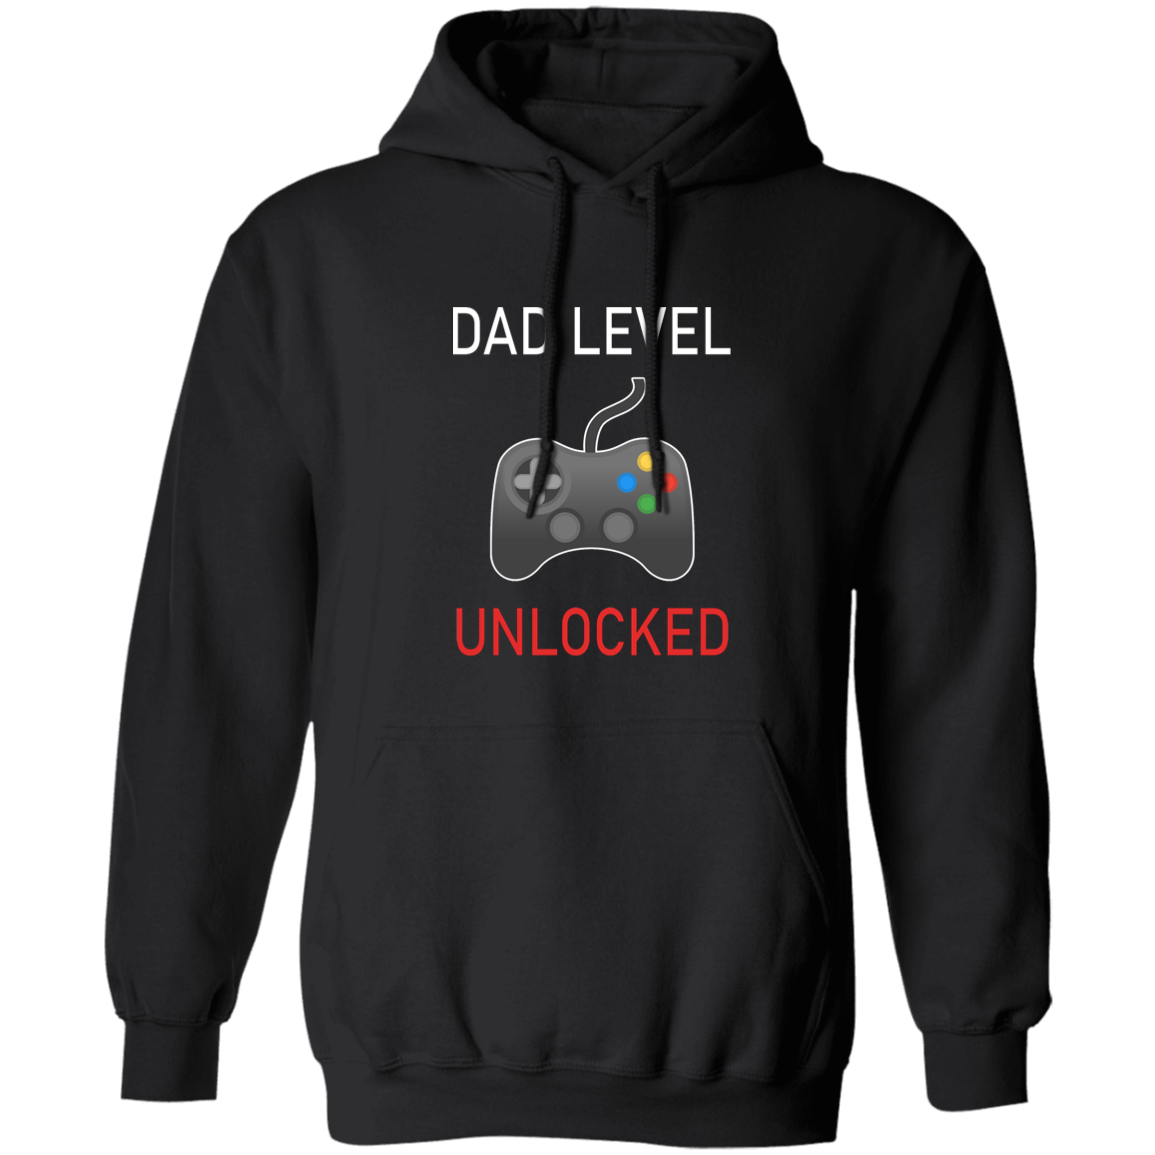 Dad Level Unlocked Unisex T-Shirt, Sweatshirt, Hoodie